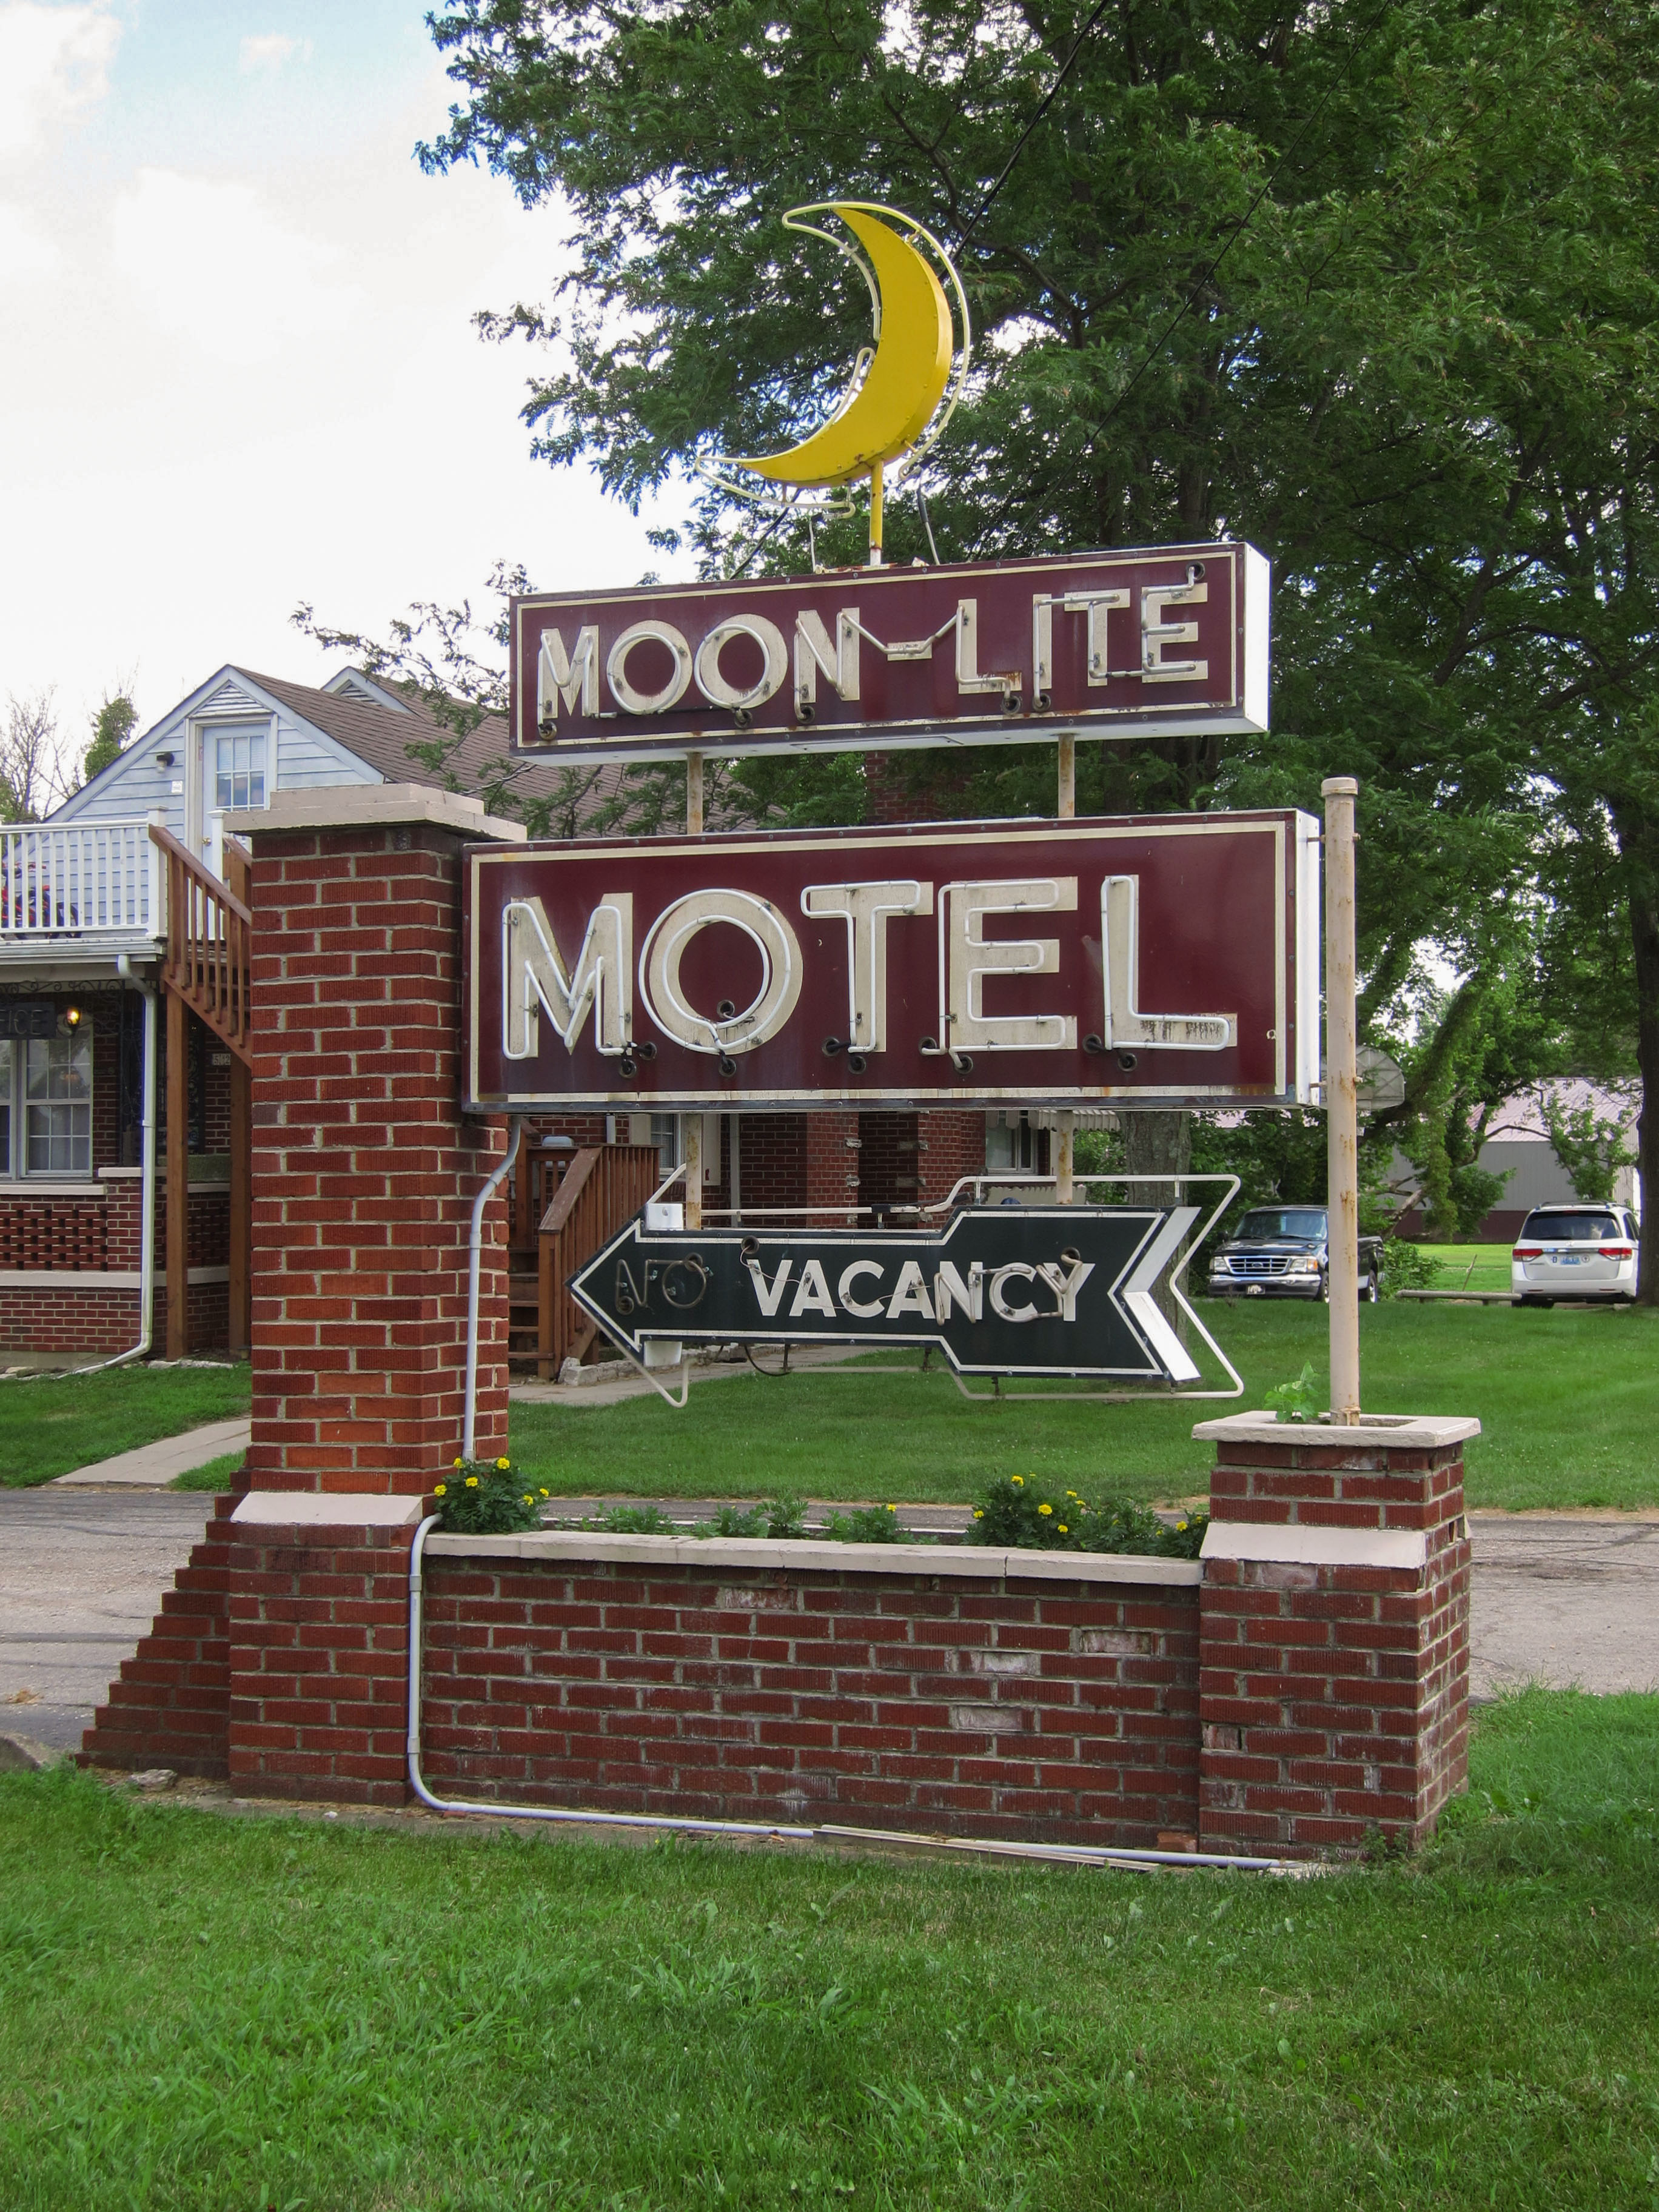 Moon-Lite Motel - 520 South Adams Street, Versailles, Indiana U.S.A. - July 6, 2018